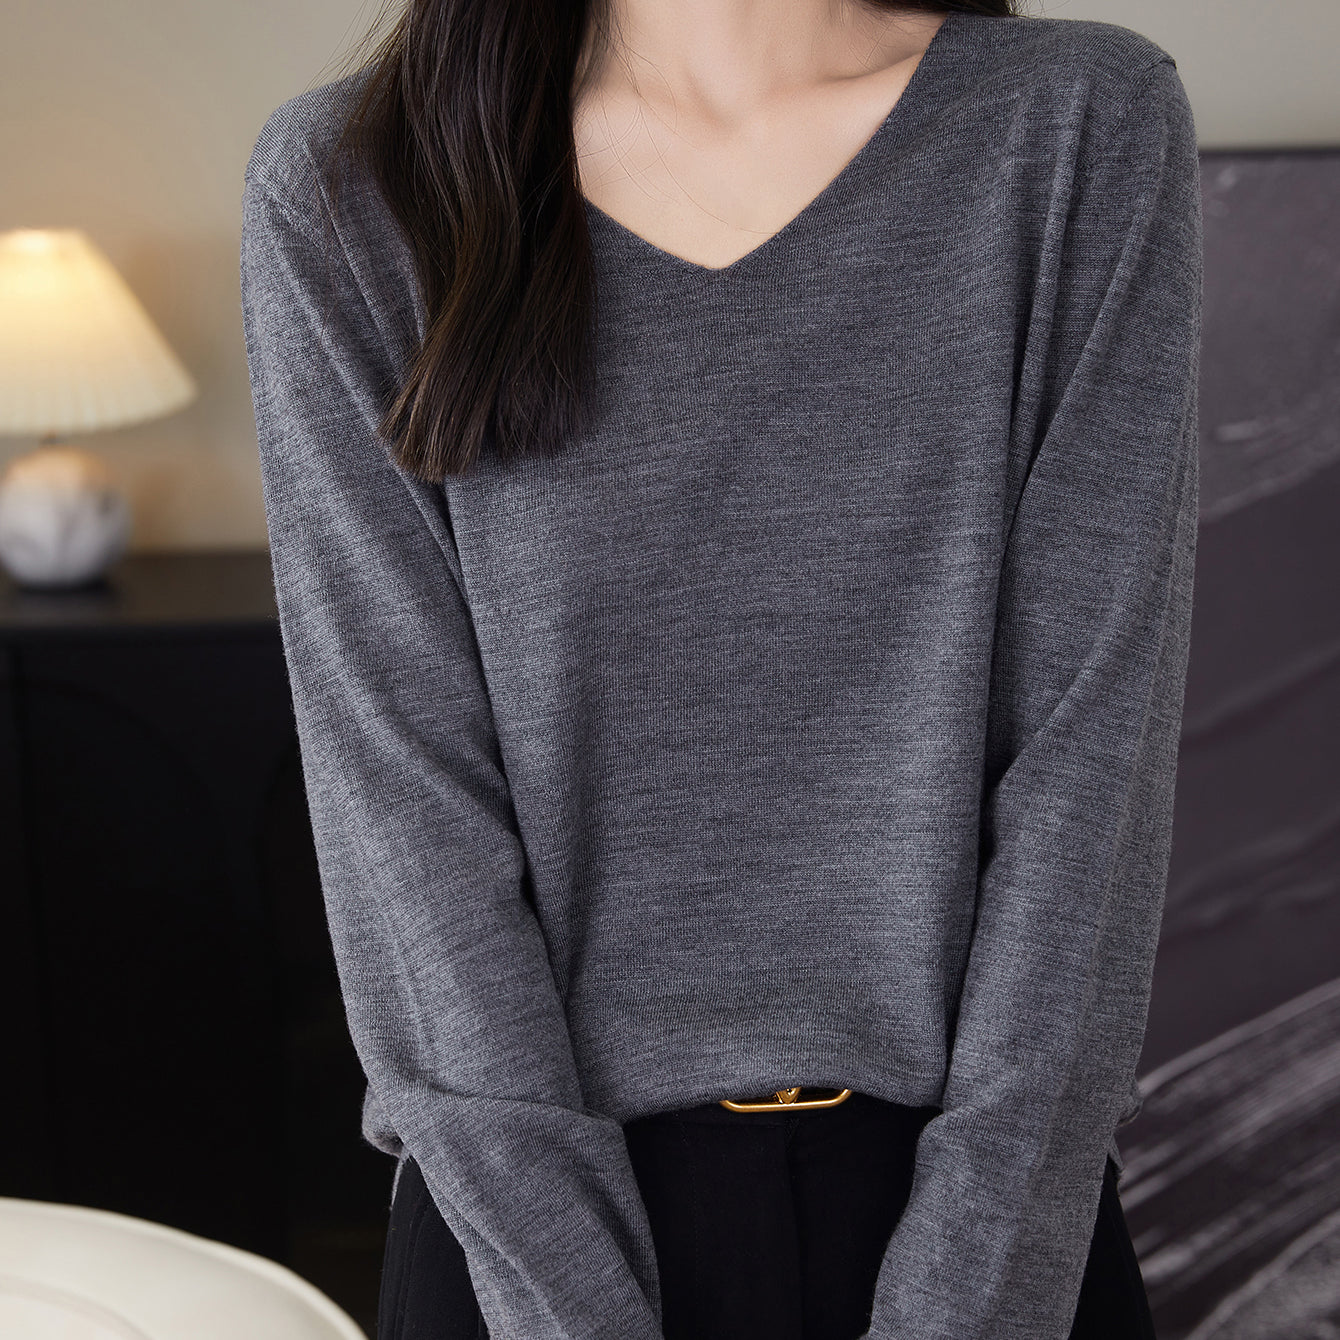 Chanyarn Women's 100% Merino Wool Base Layer Shirt Tops V Neck Long Sleeve Travel Hiking Tee T Shirt Pullover Sweater